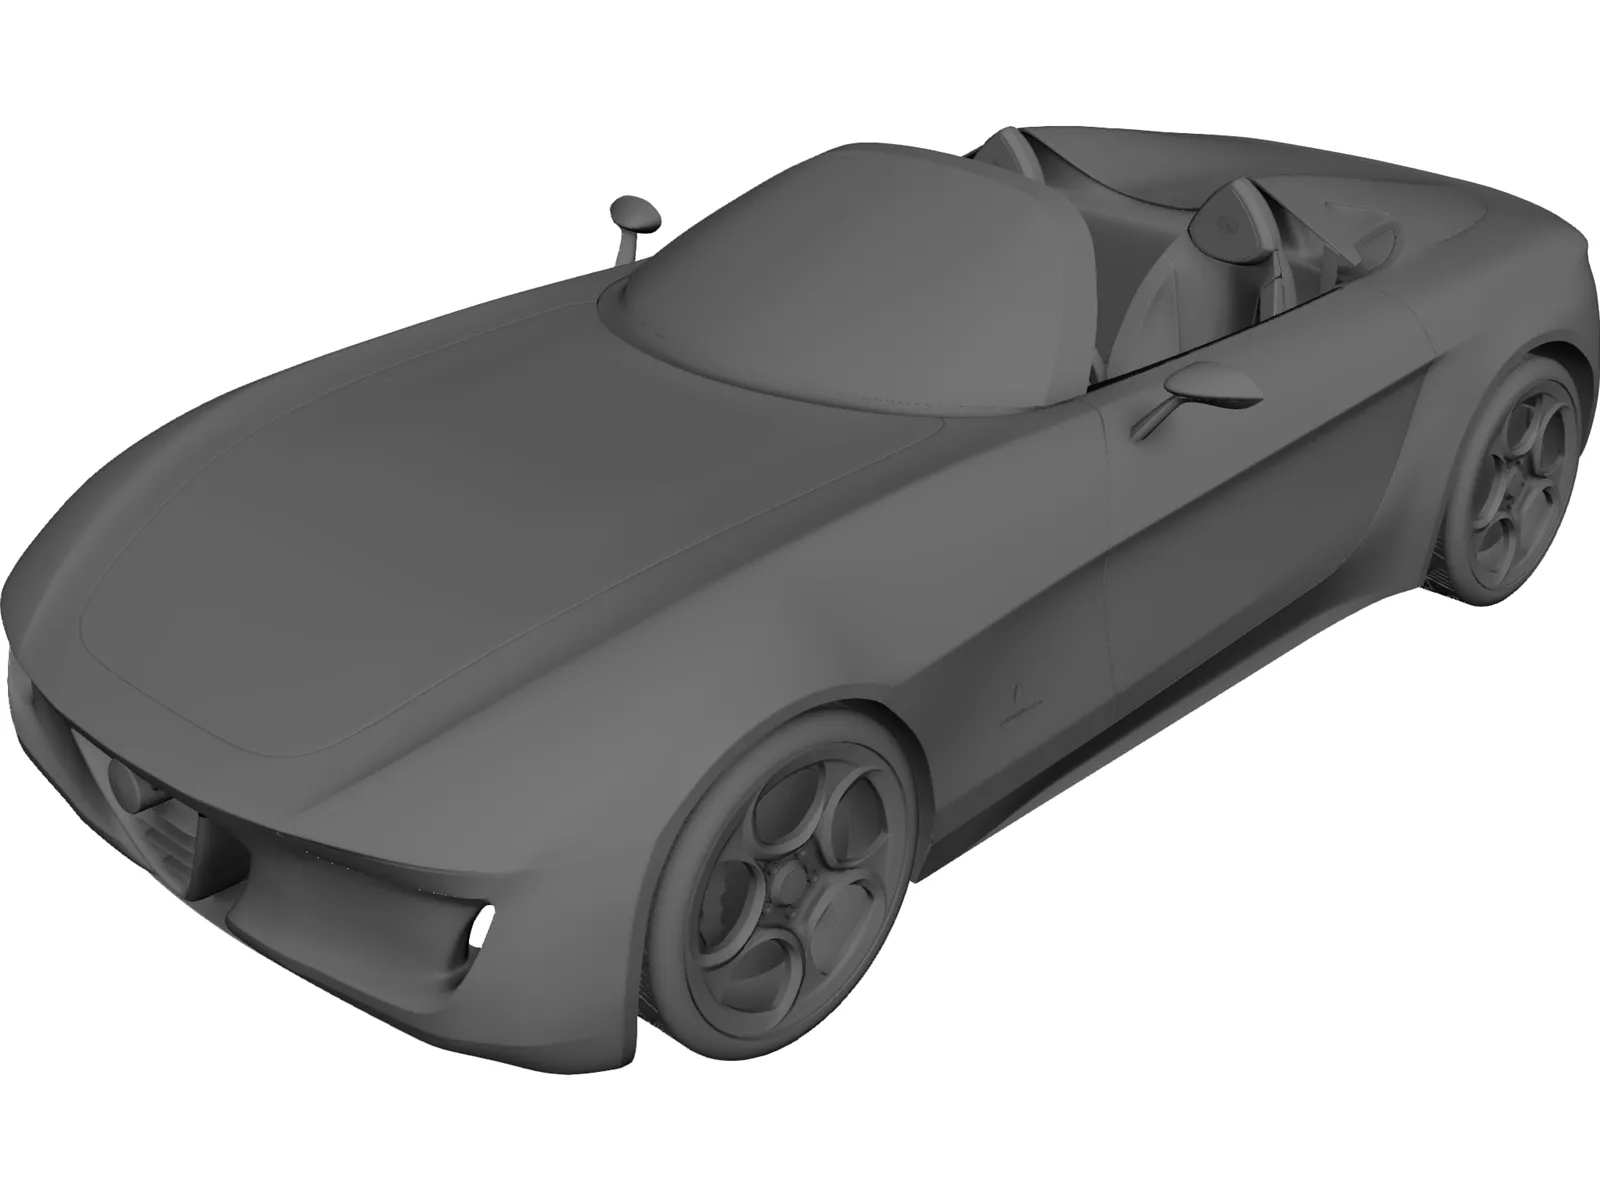 Alfa Romeo 2uettottanta Concept (2010) 3D Model